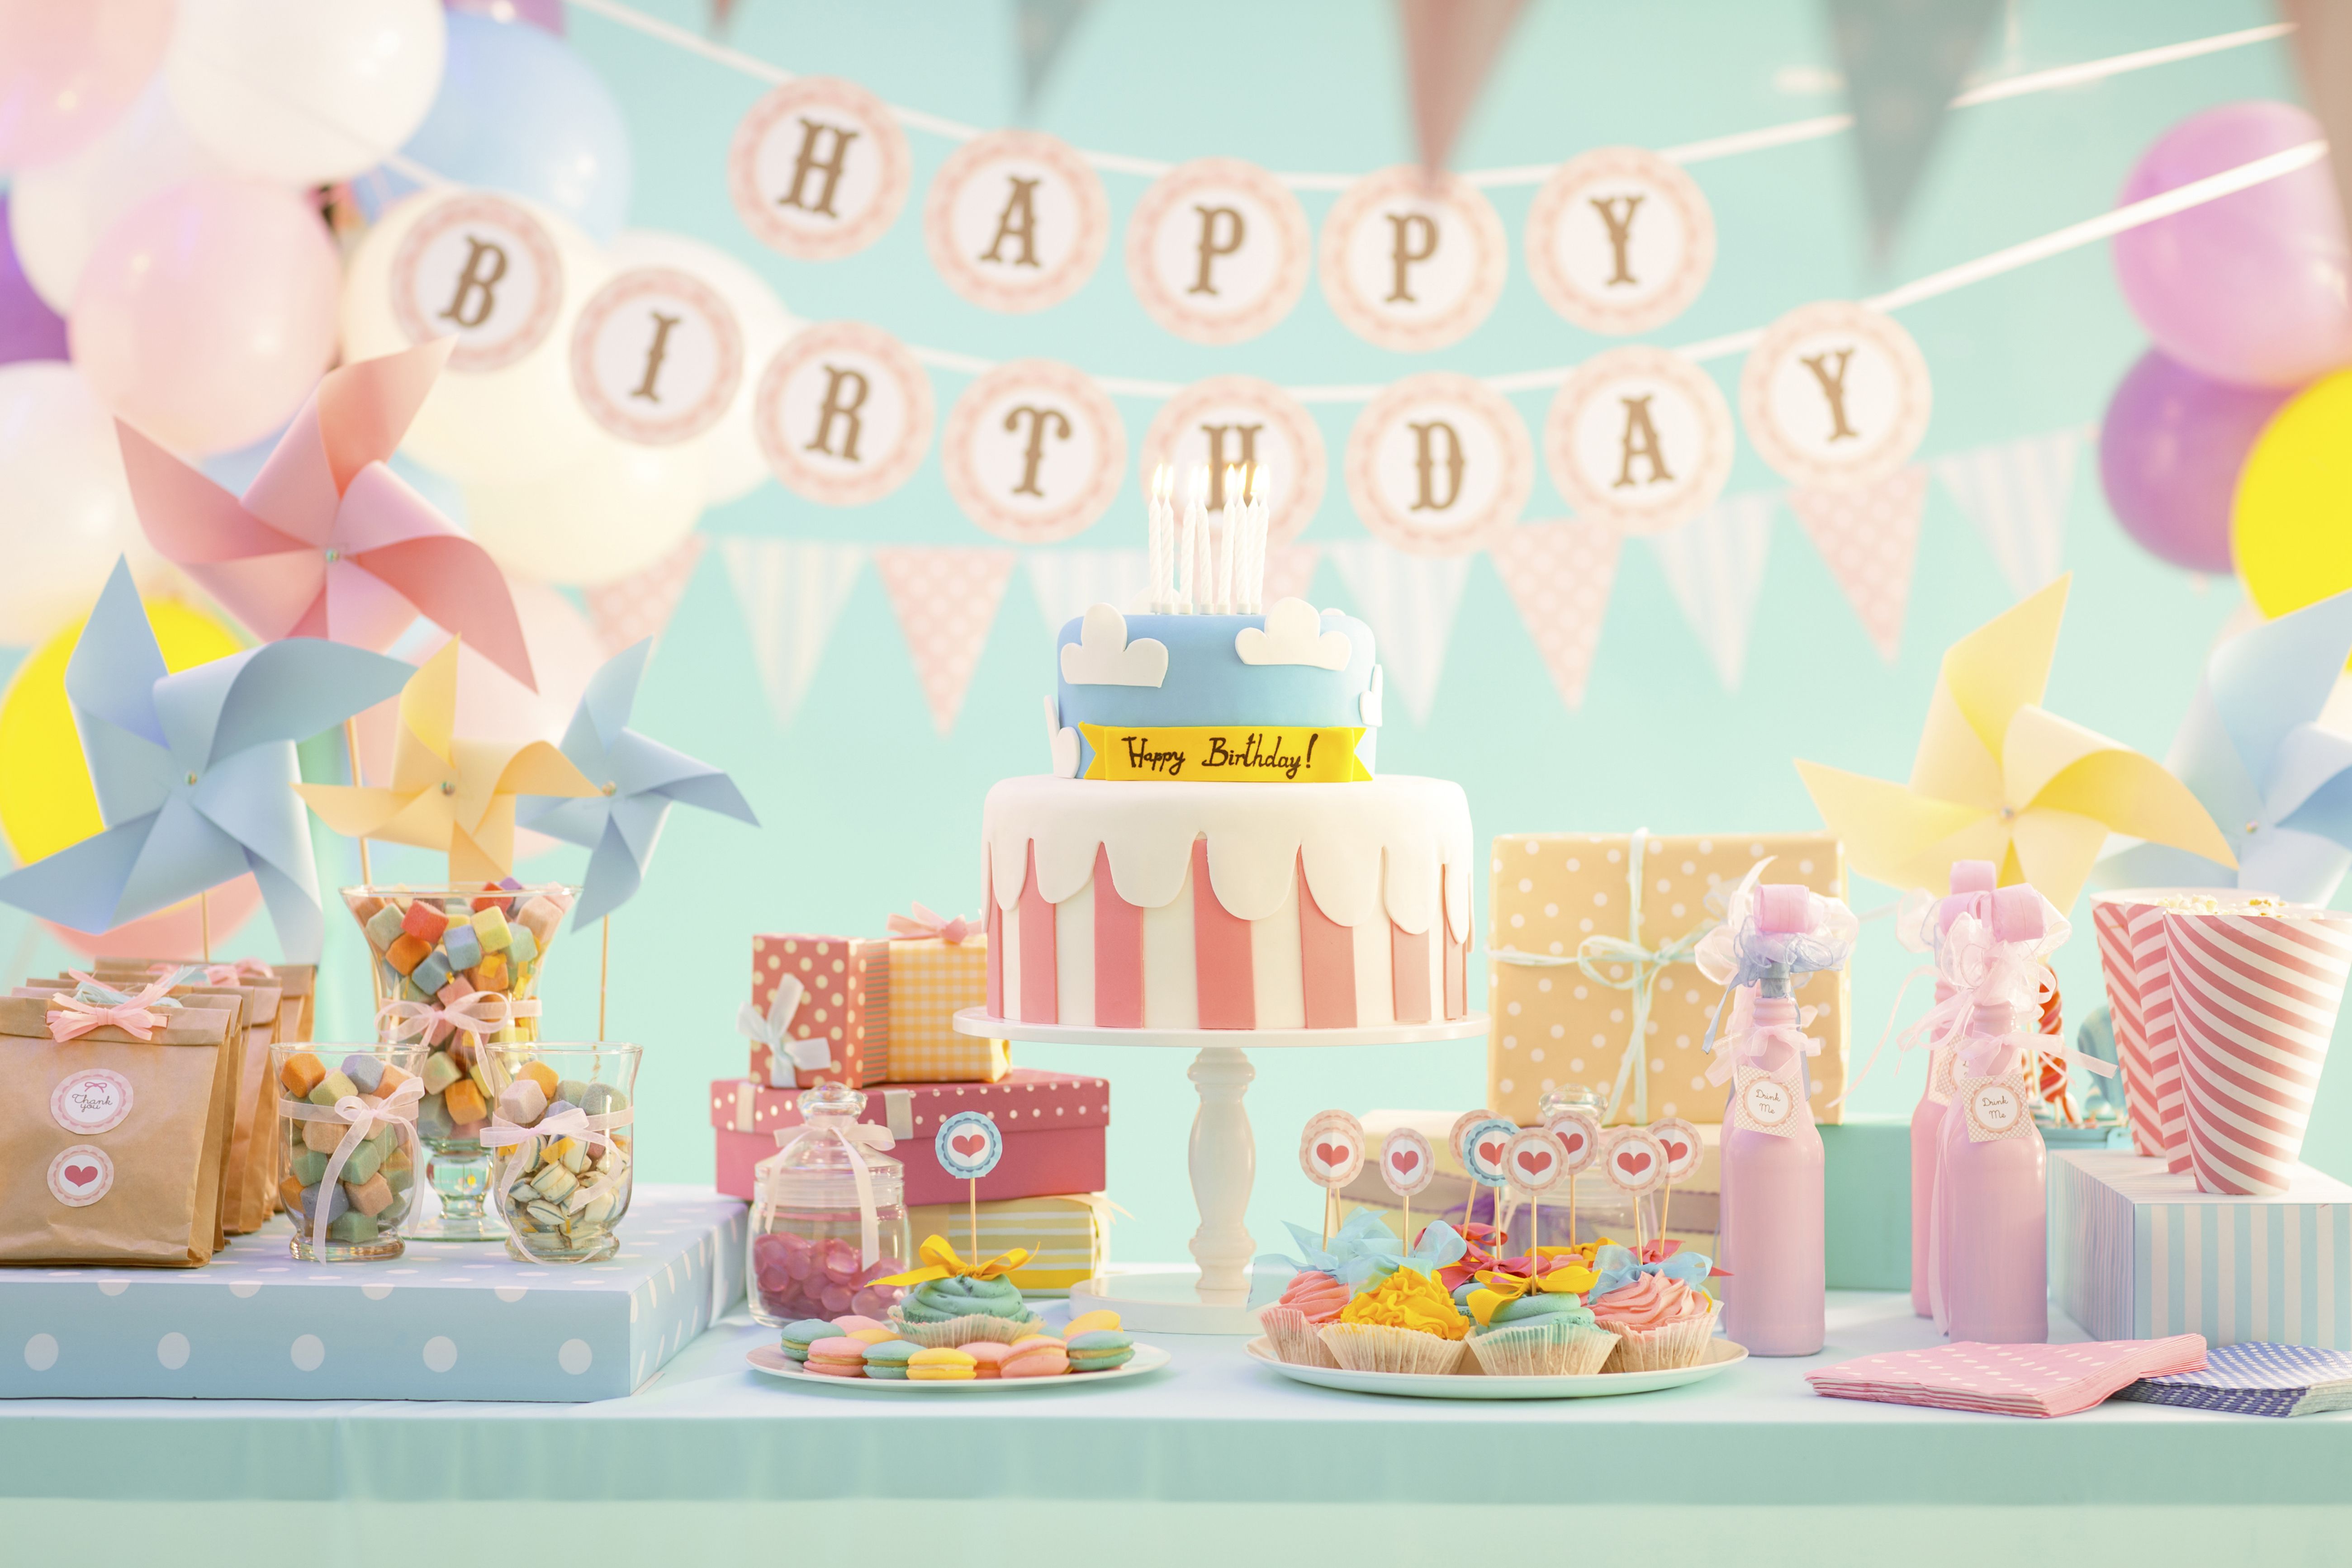 10 Easy Diy Birthday Decorations Cute Homemade Party Decor - How To Make Birthday Decorations At Home Easy